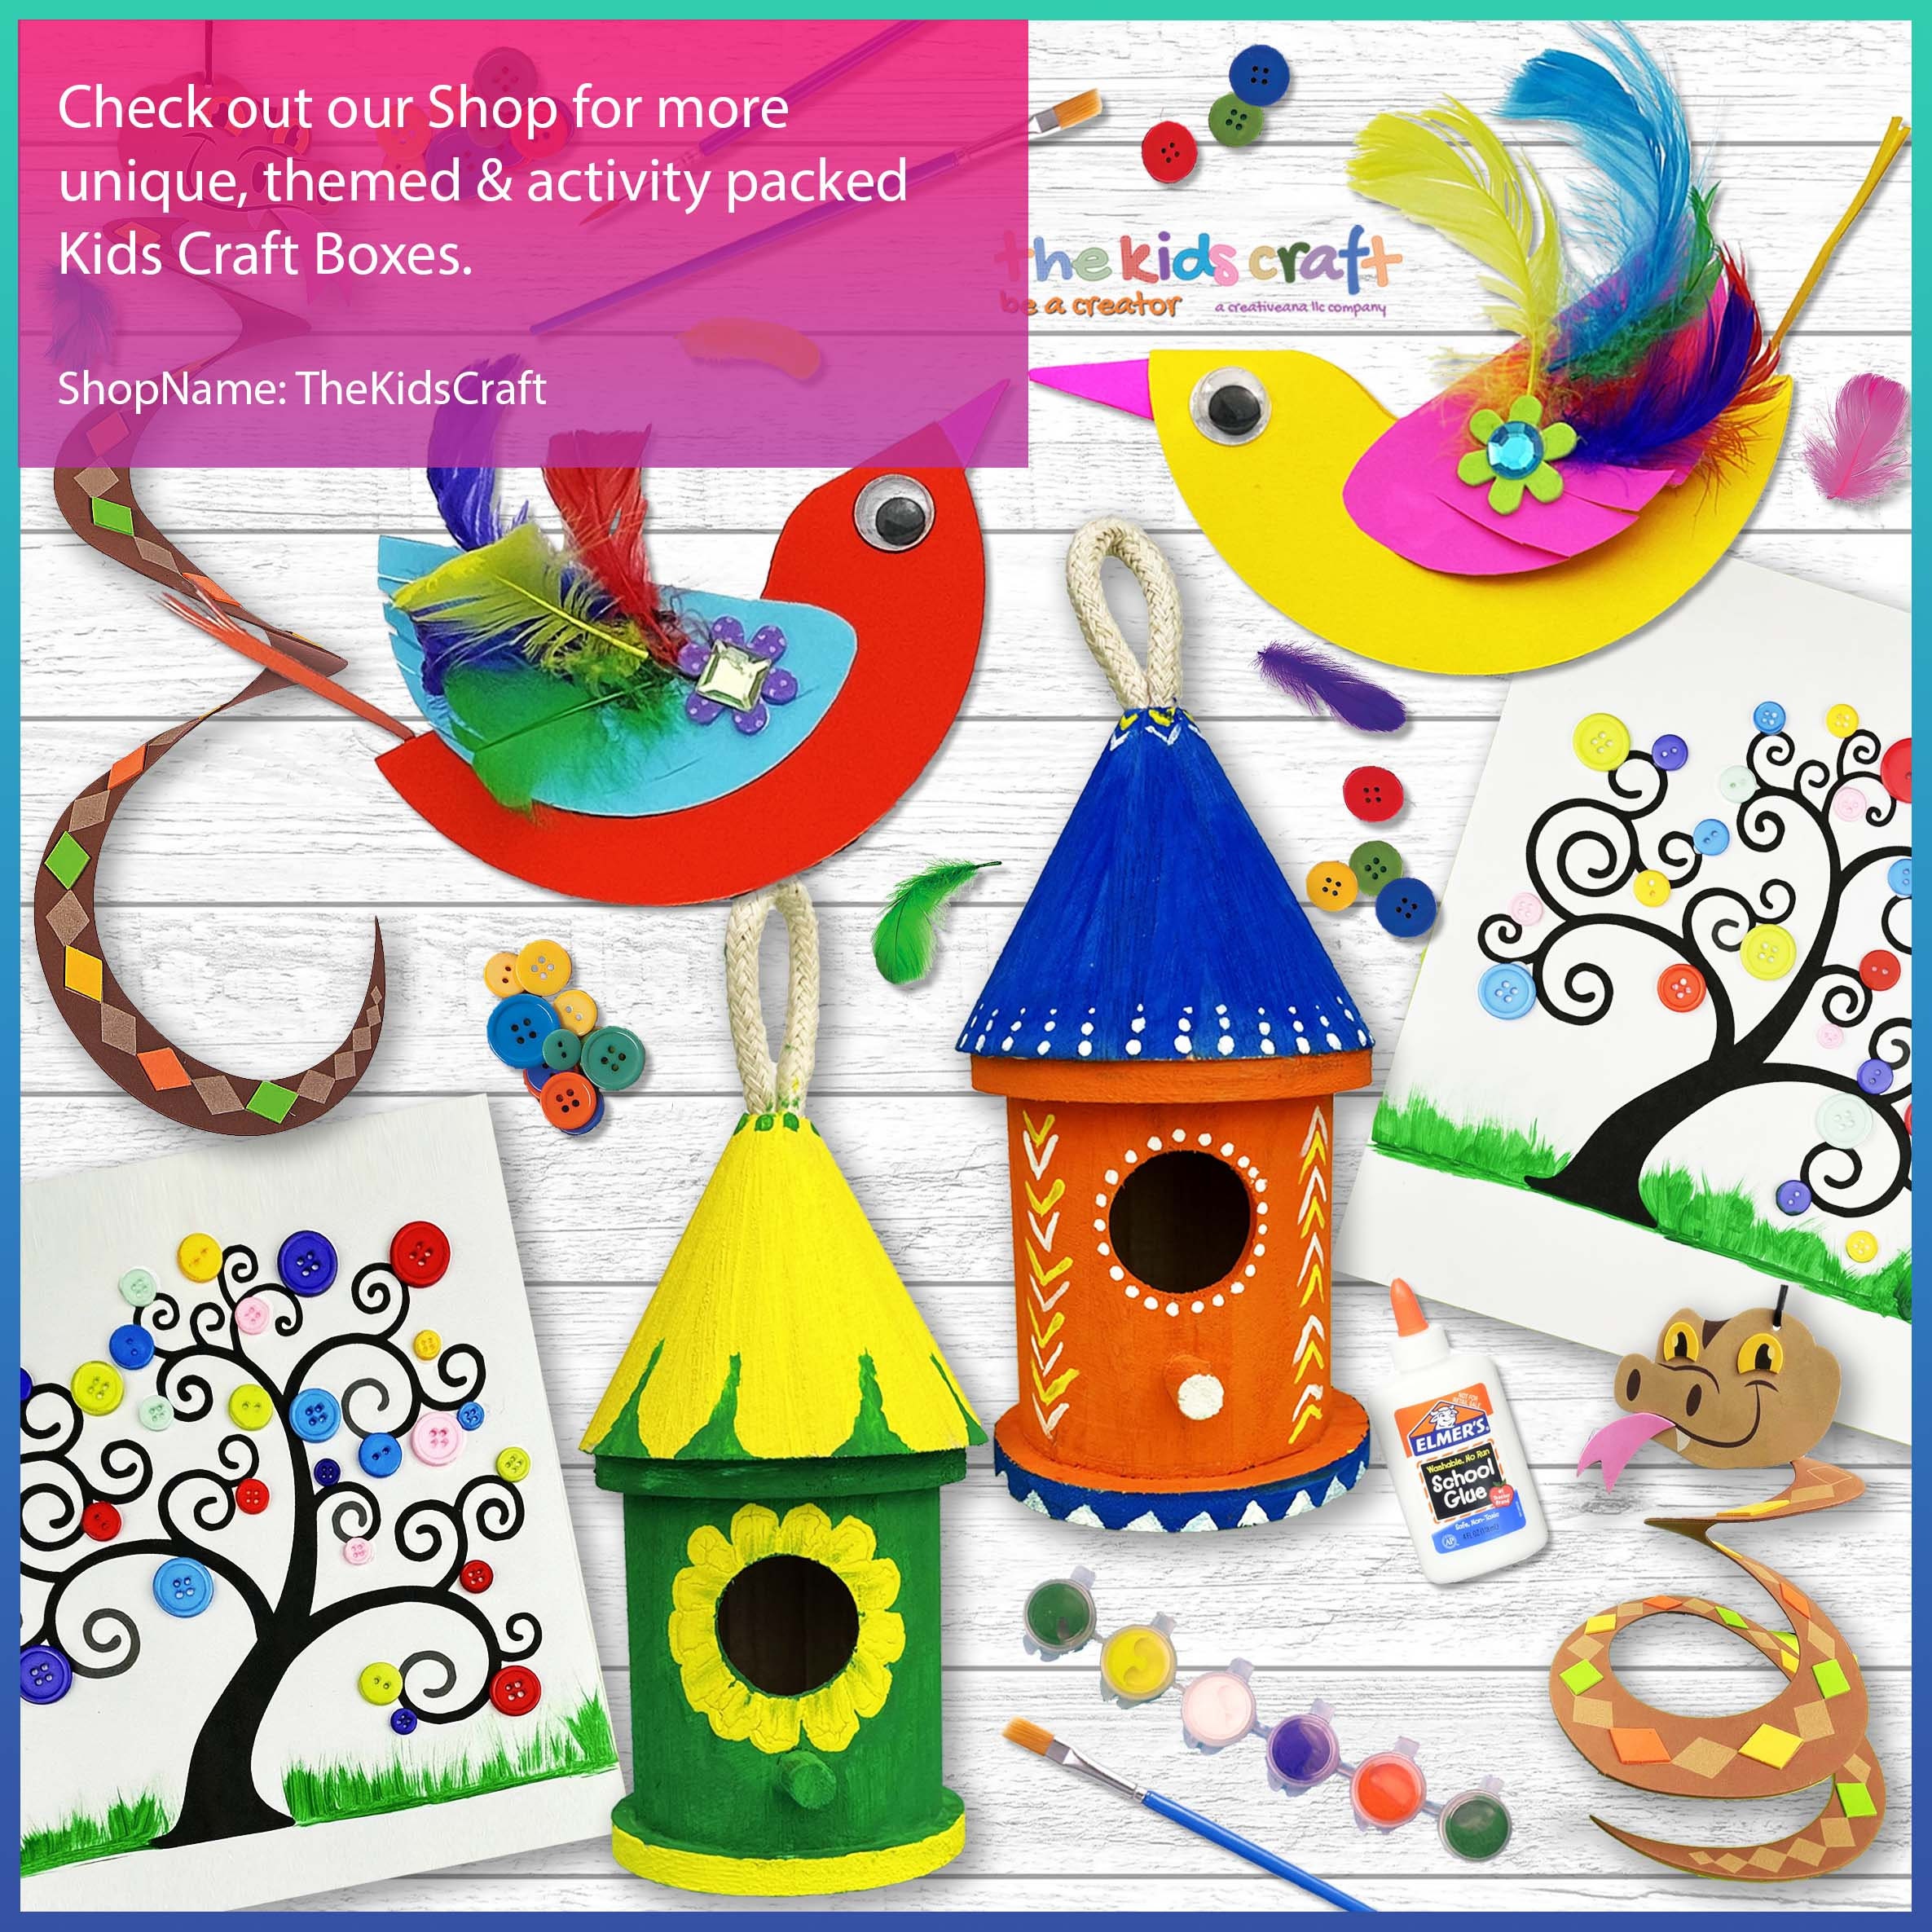 10 Rainbow Party Craft Ideas For Kids - Artsy Craftsy Mom